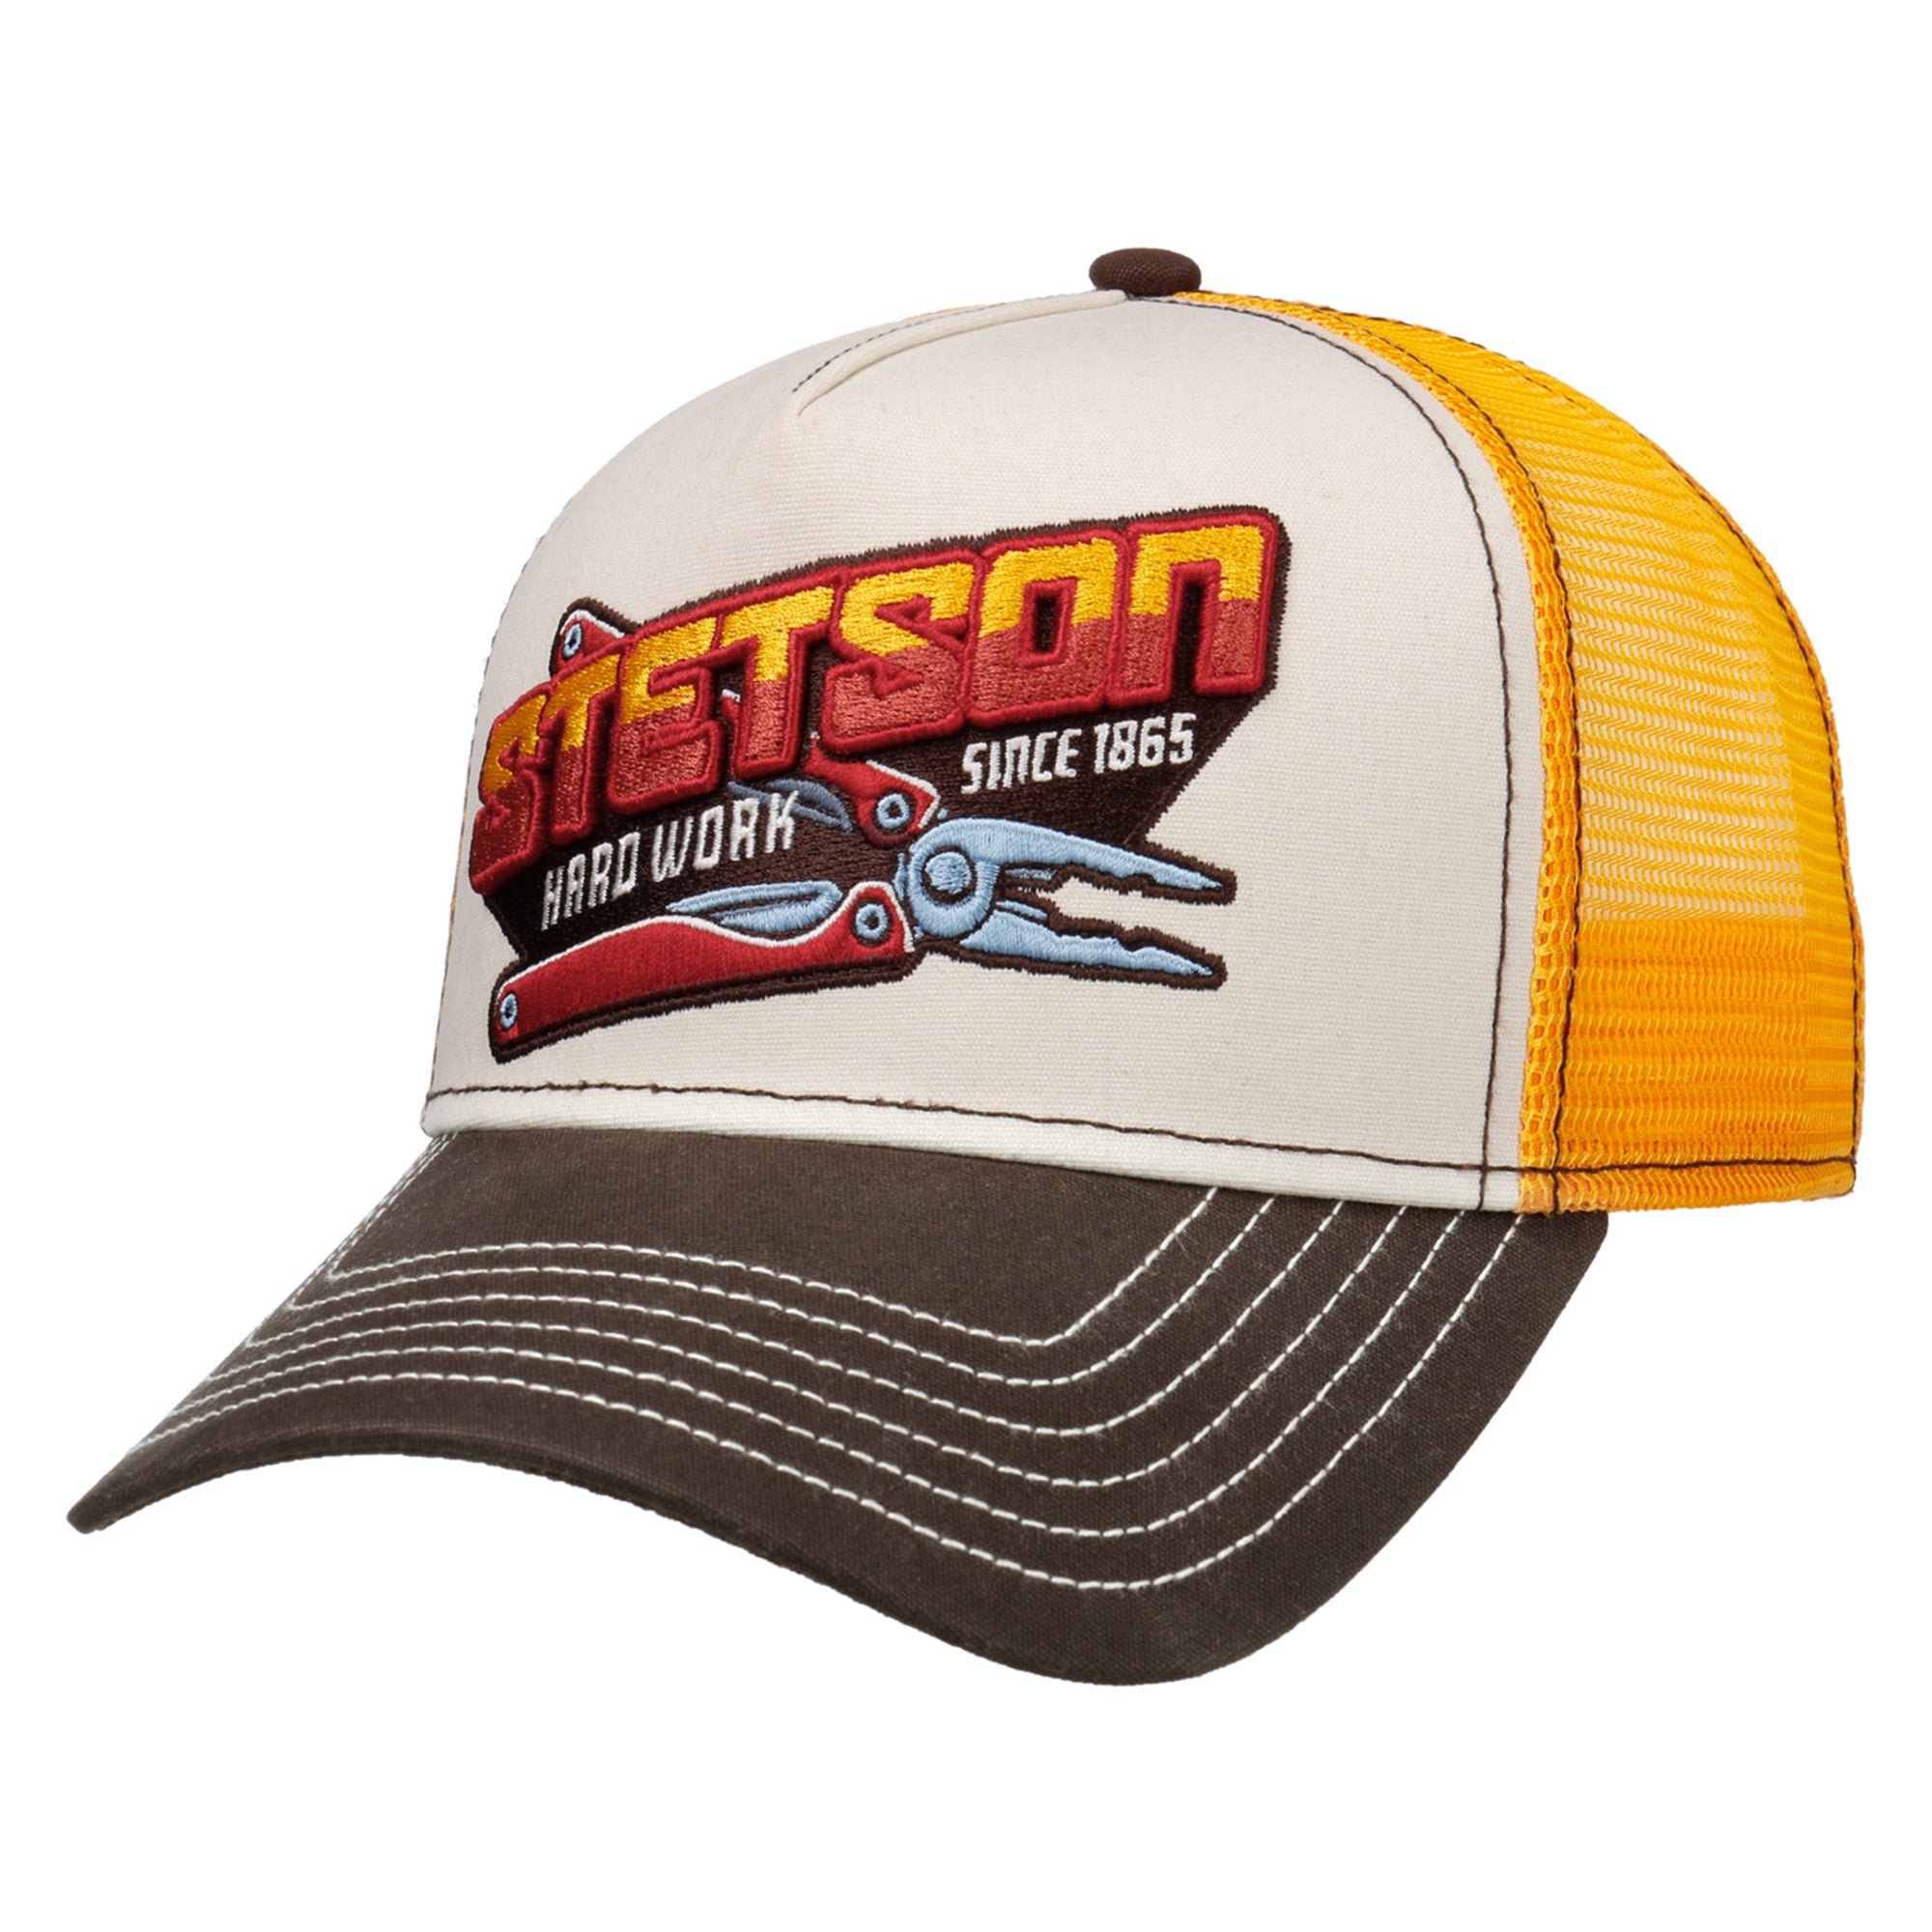 Stetson Hard Work Trucker Cap - Brown/Yellow